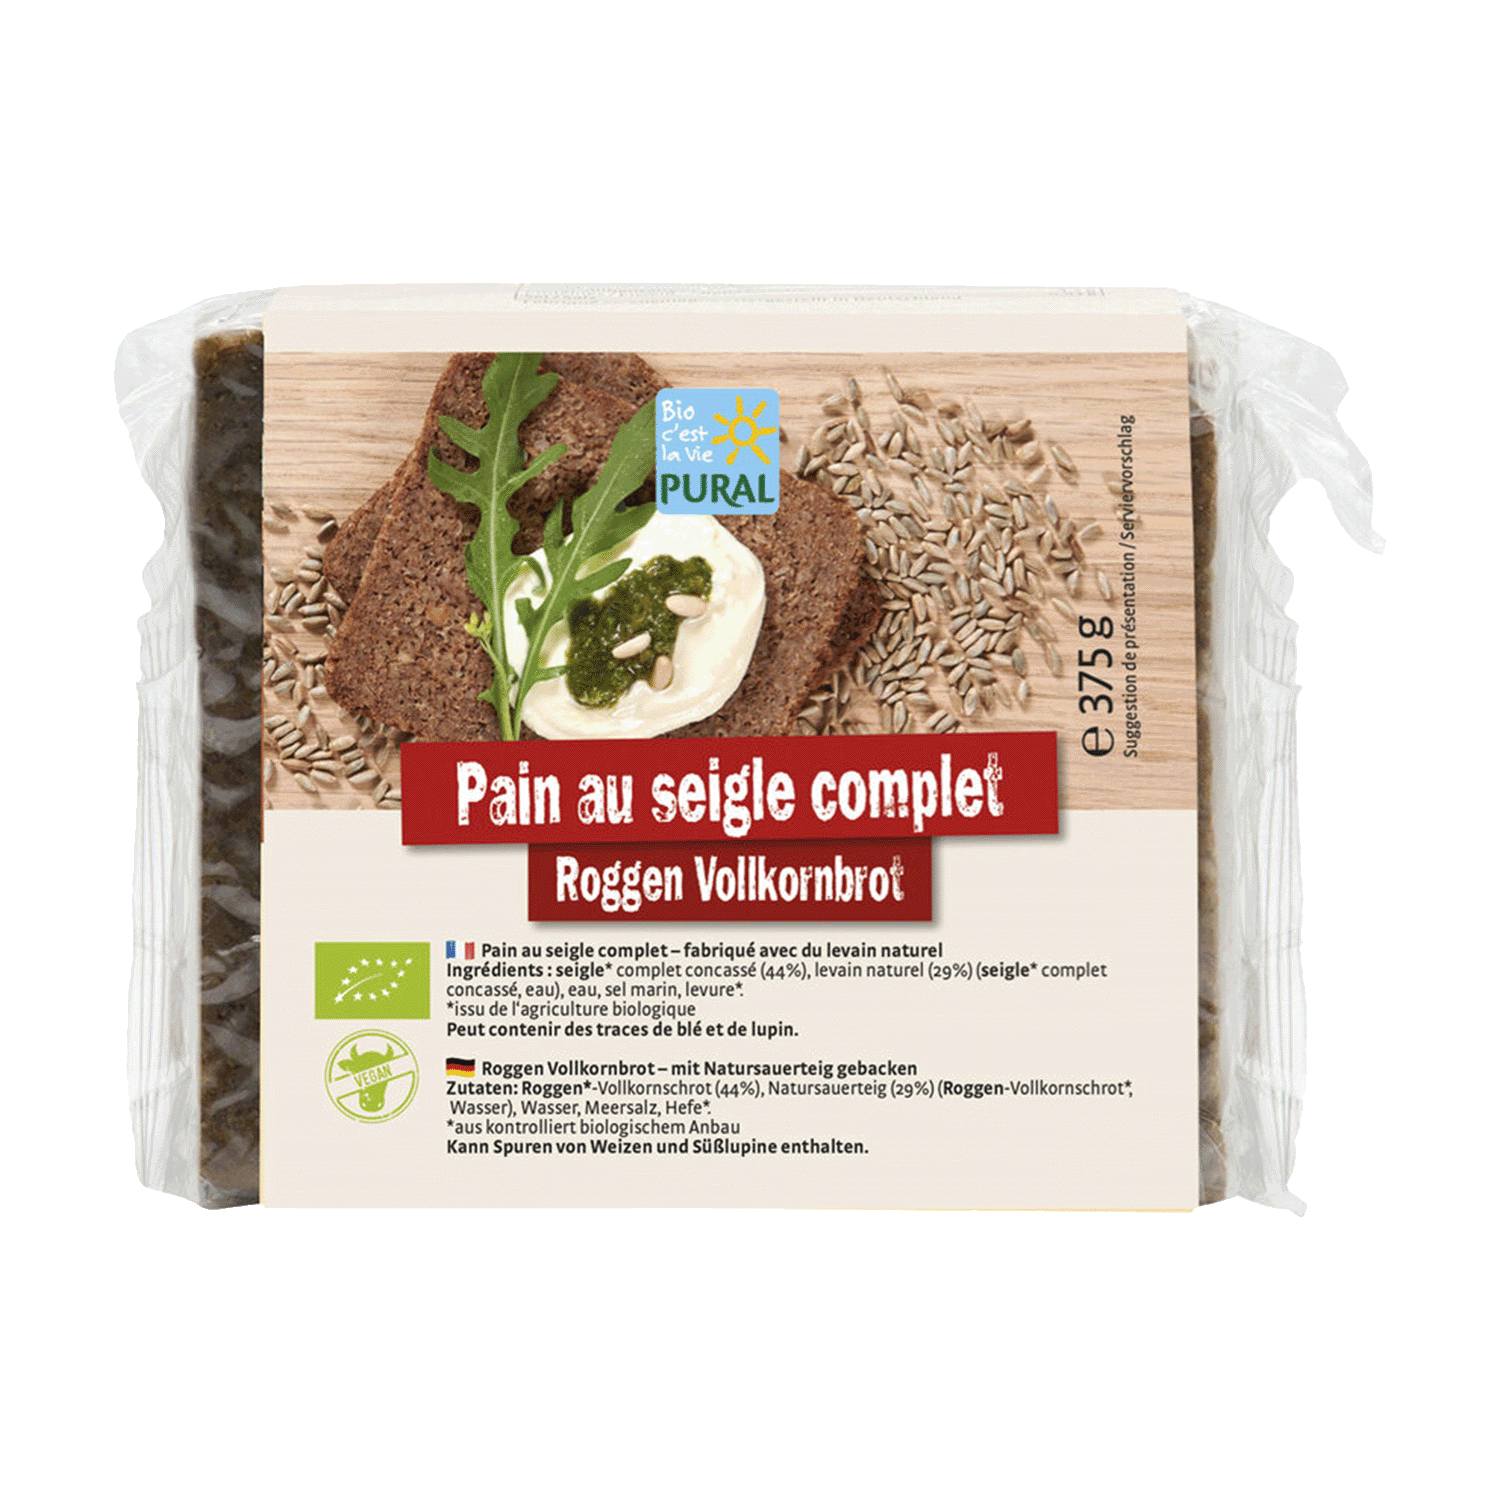 Rye Wholemeal Bread, Organic, 375g